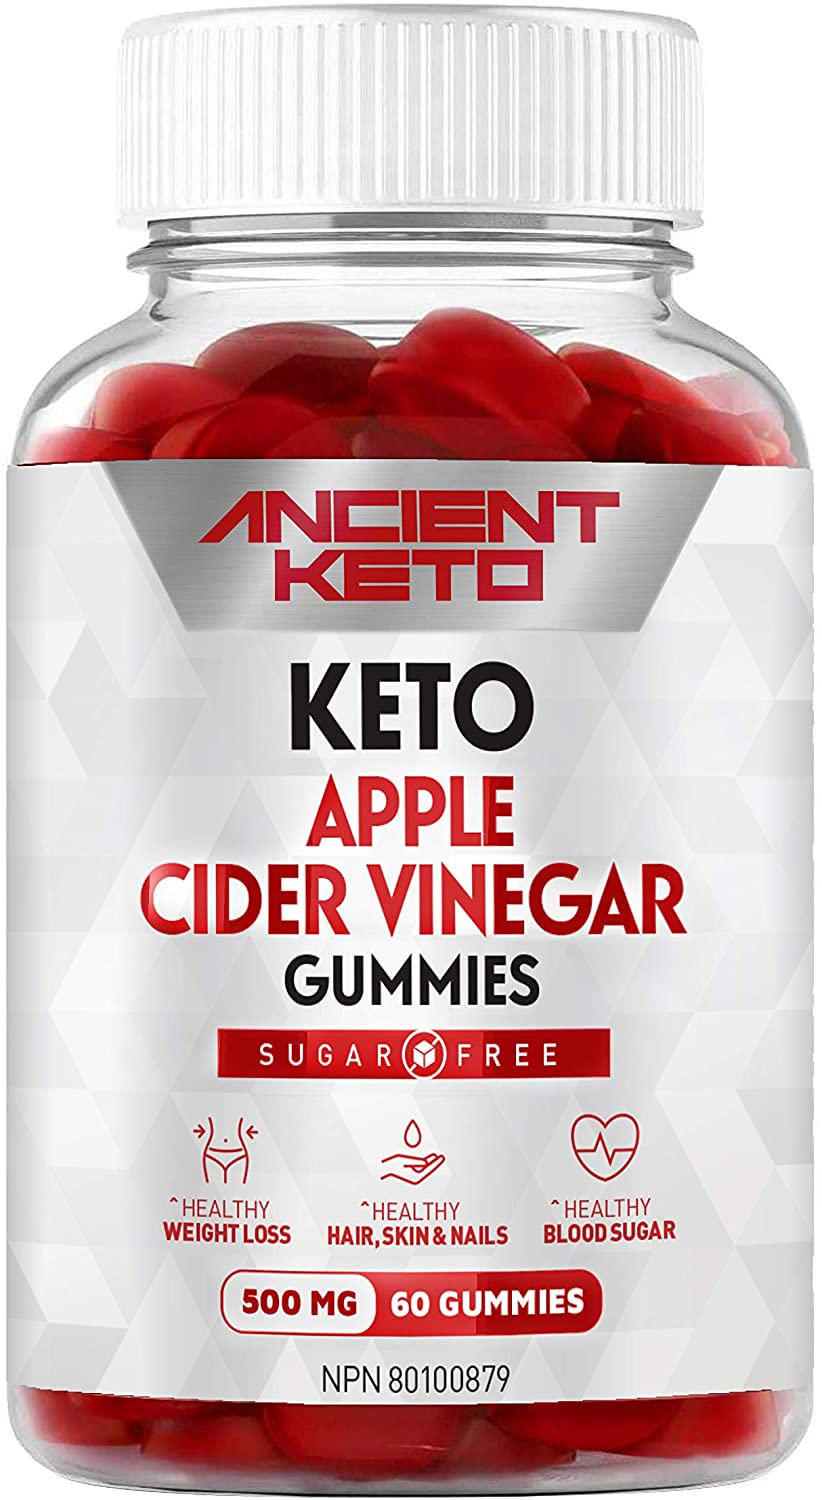 Sugar Free Apple Cider Vinegar Gummies